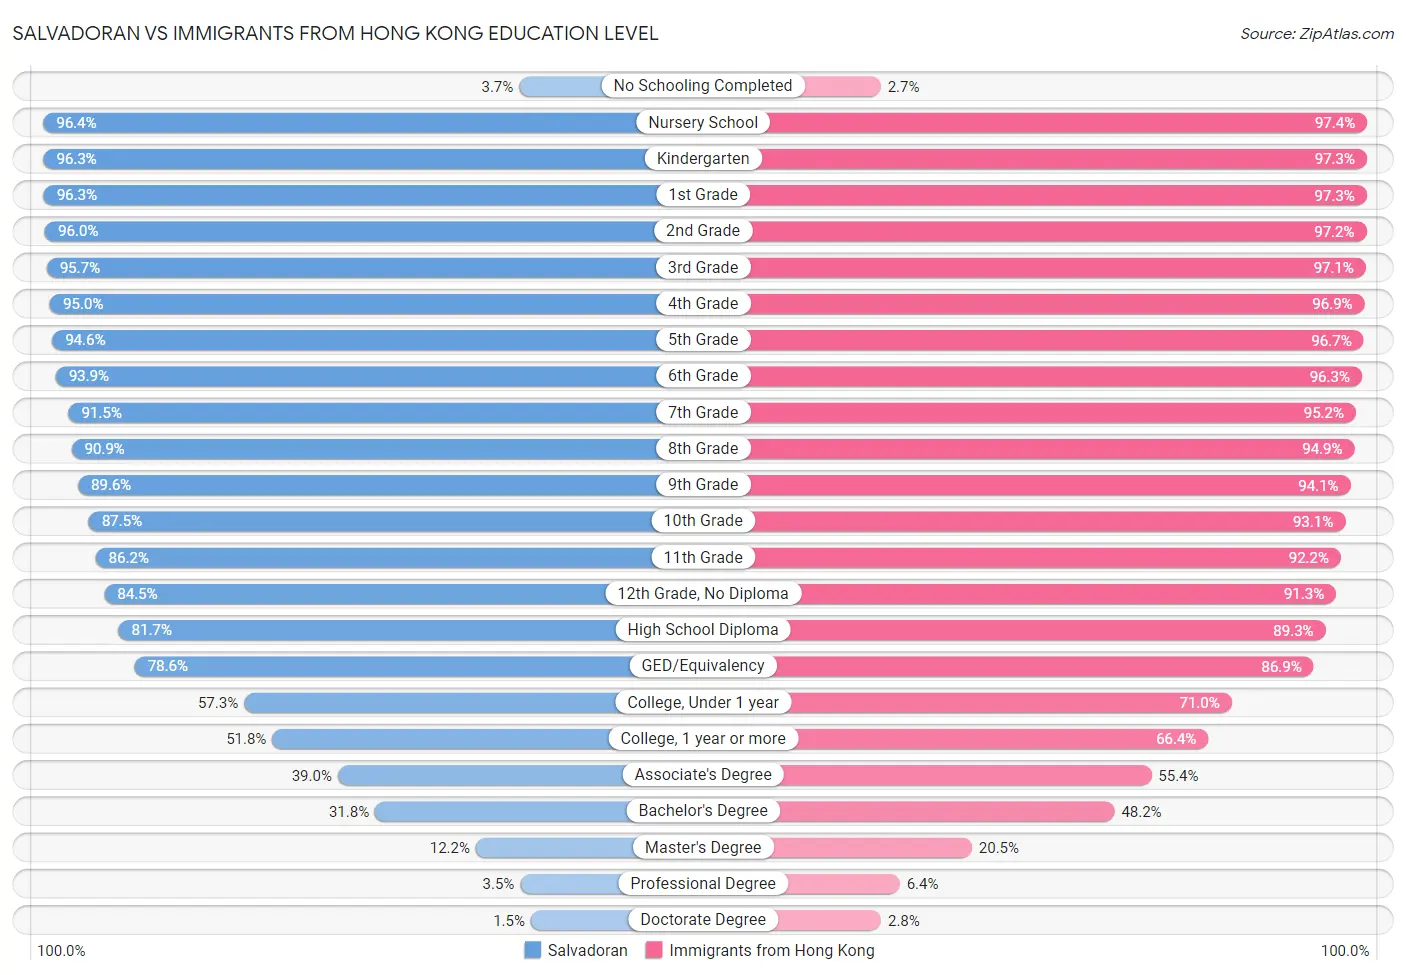 Salvadoran vs Immigrants from Hong Kong Education Level